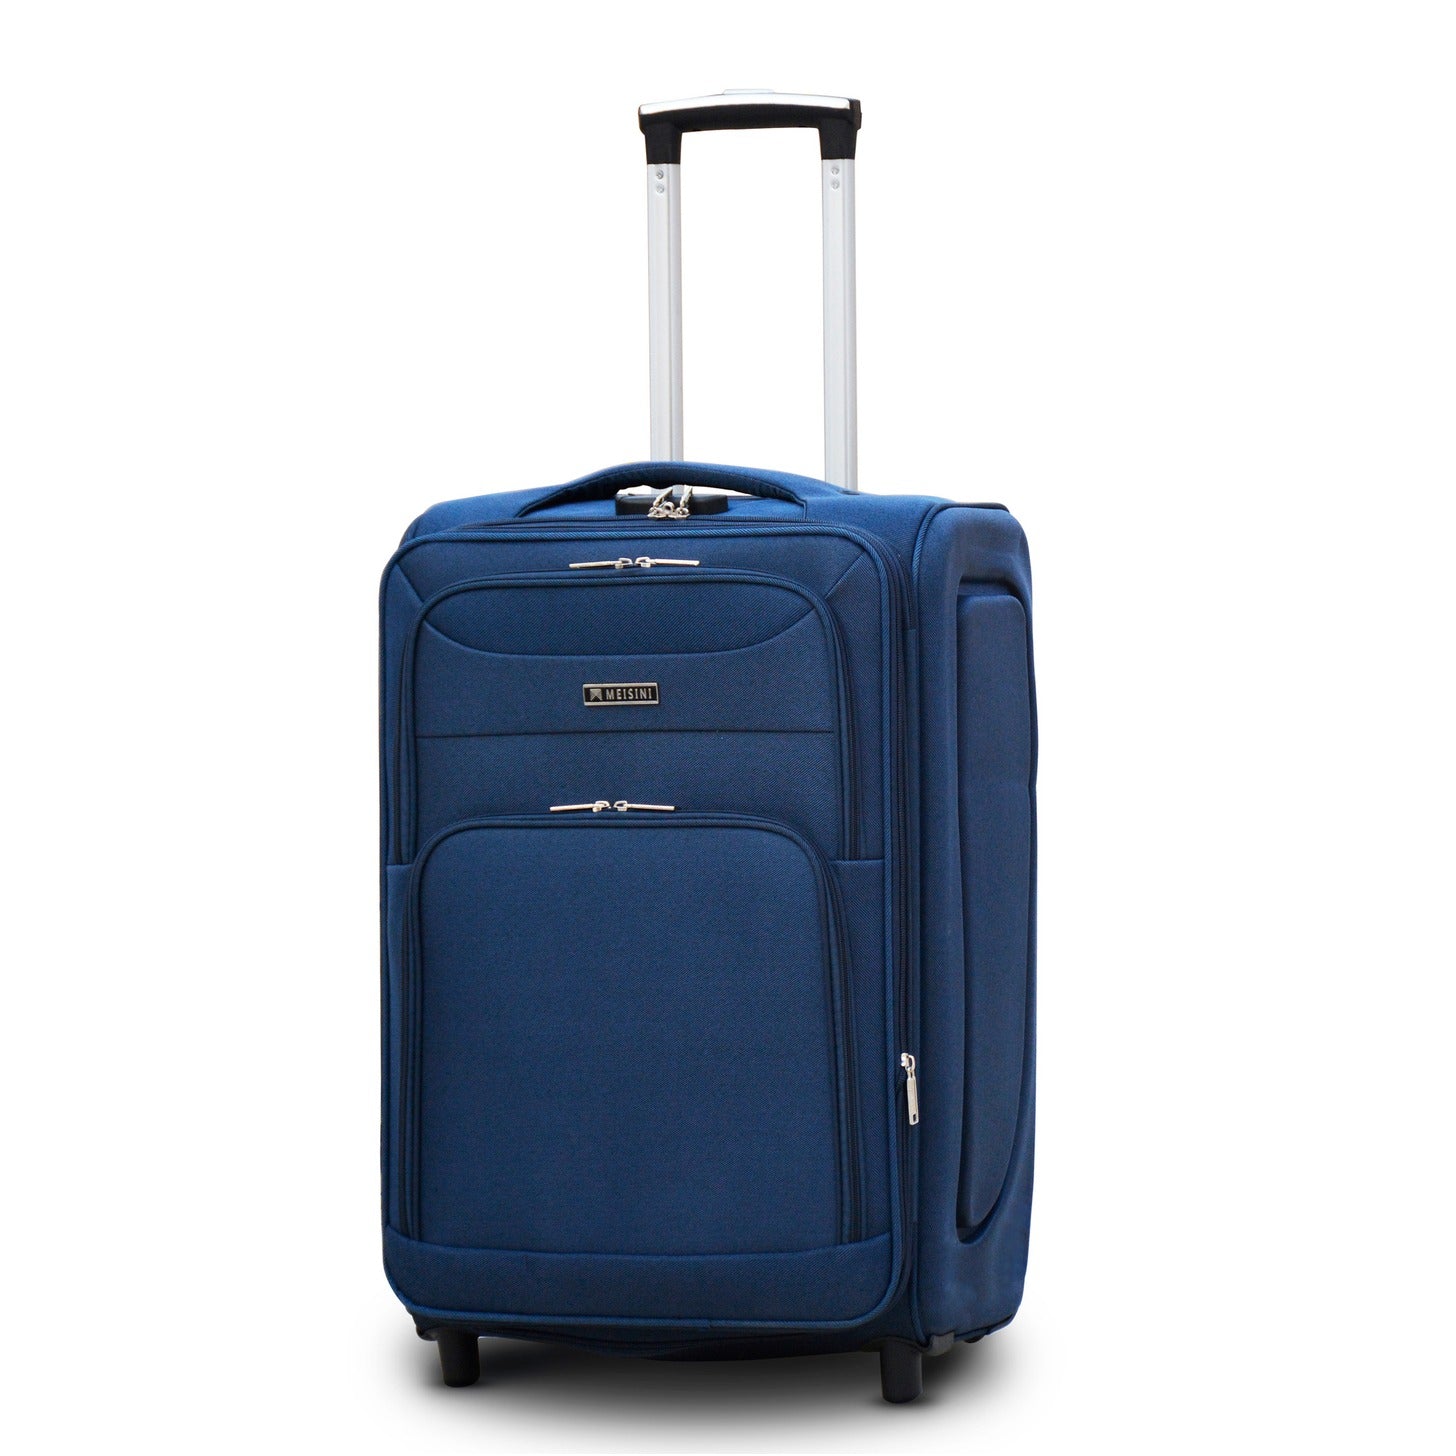 24" LP 2 Wheel 0161 Lightweight Soft Material Luggage Bag